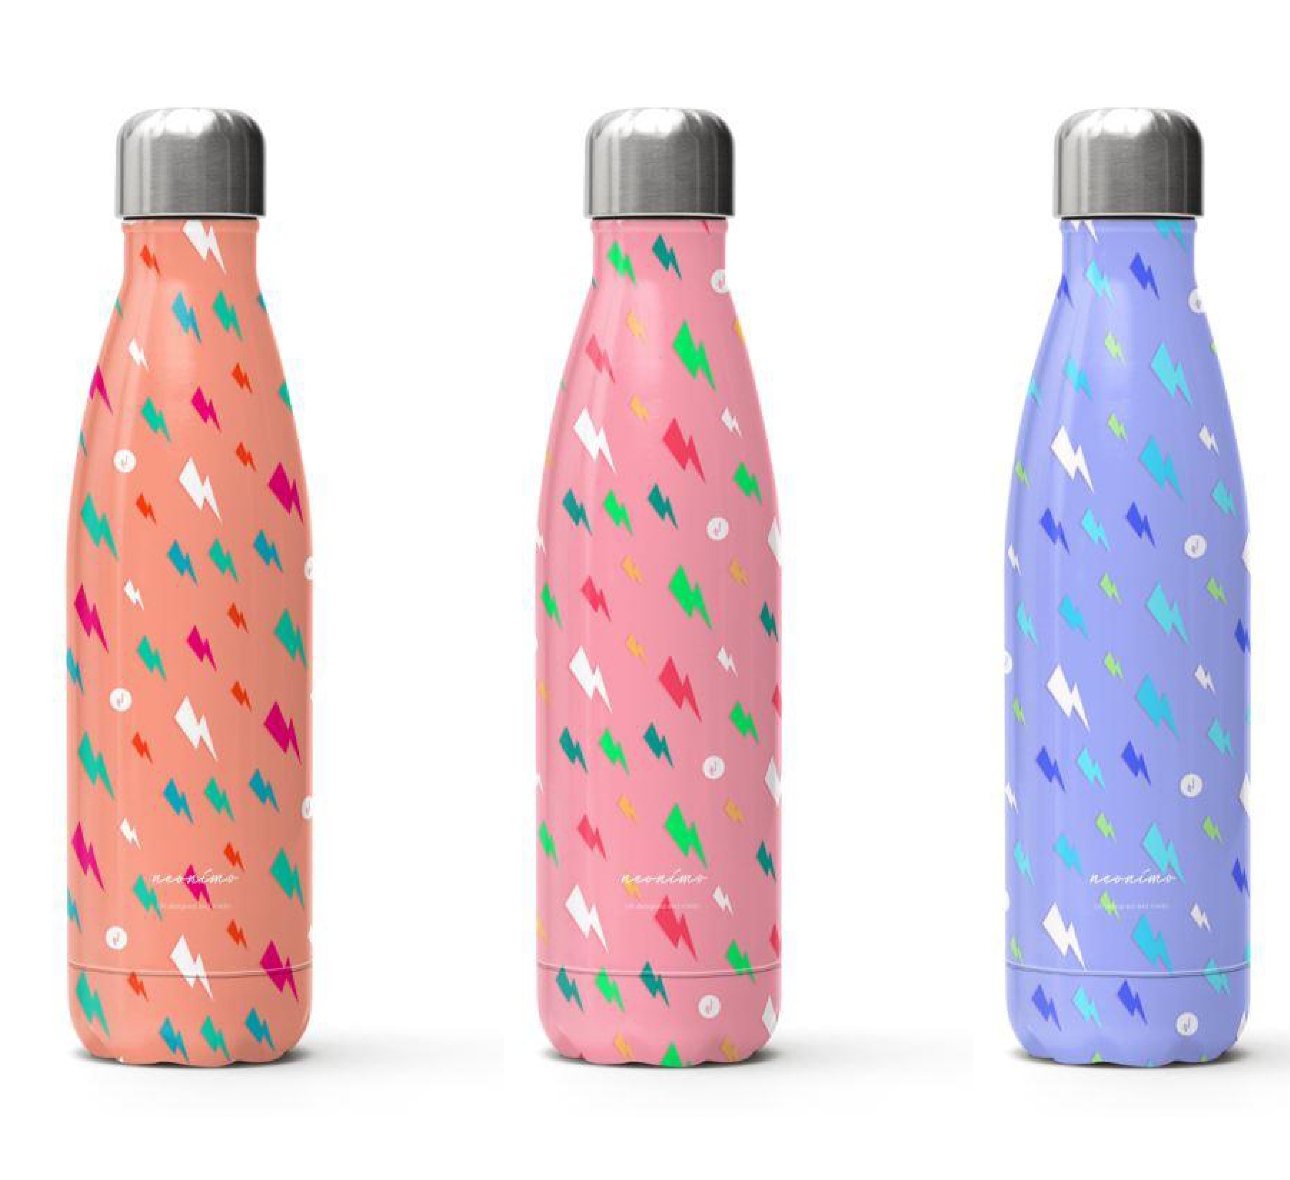 water bottles in three designs